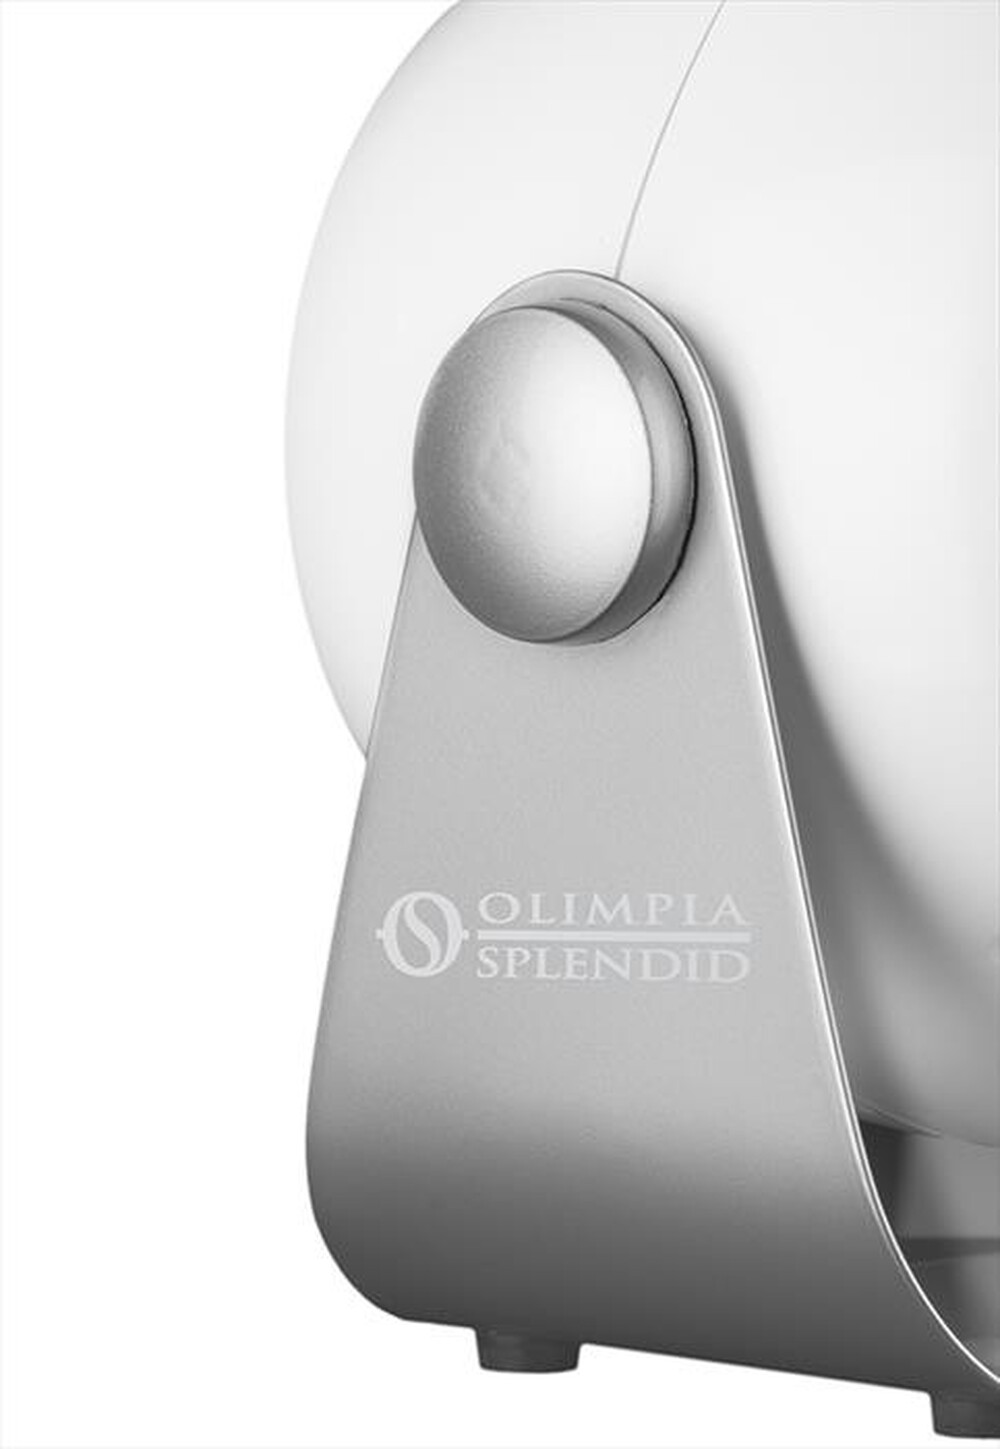 "OLIMPIA SPLENDID - CALDODESIGN-bianco / silver"